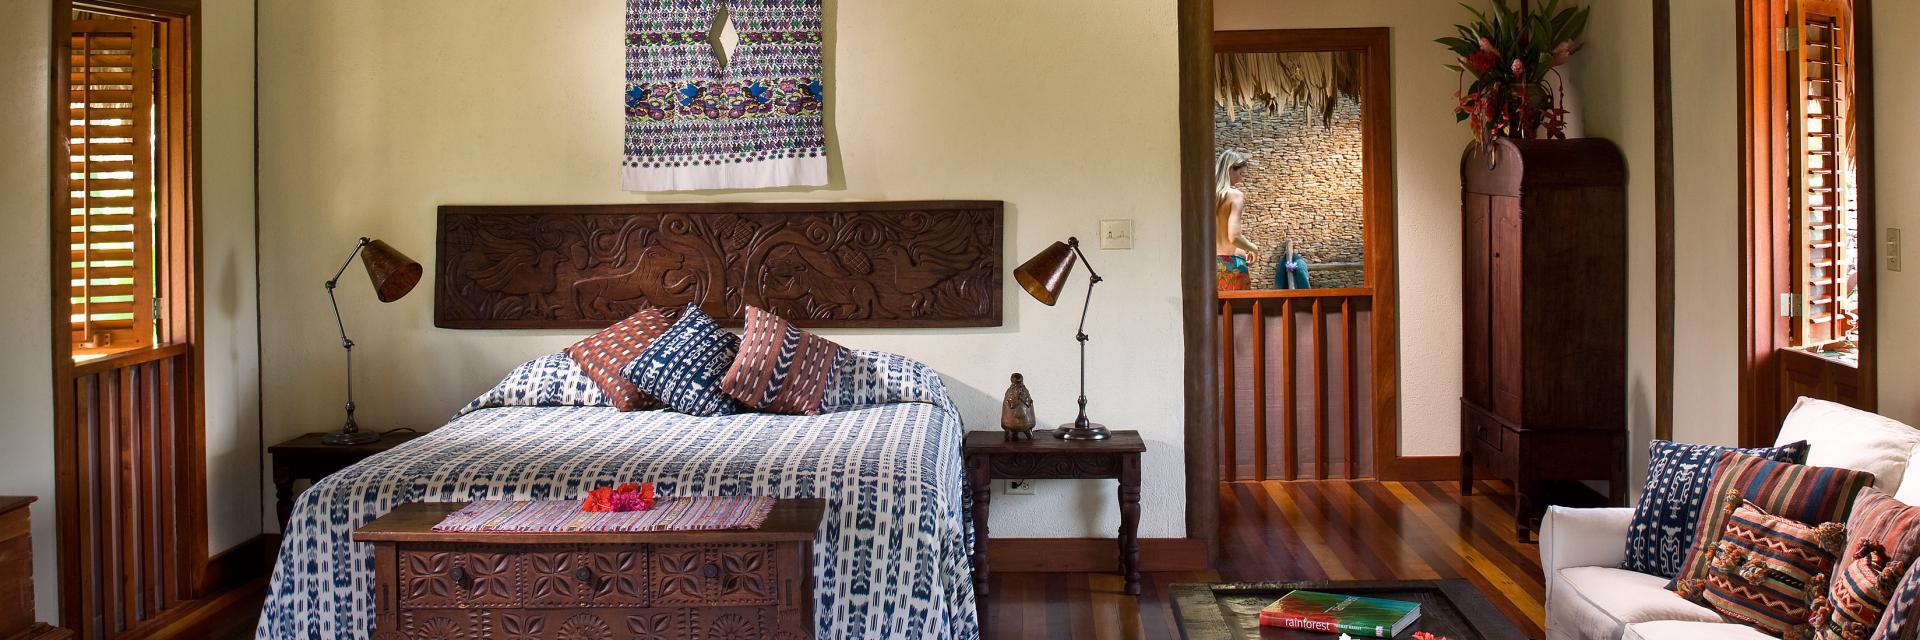 Blancaneaux Lodge Luxury Cabana Bedroom